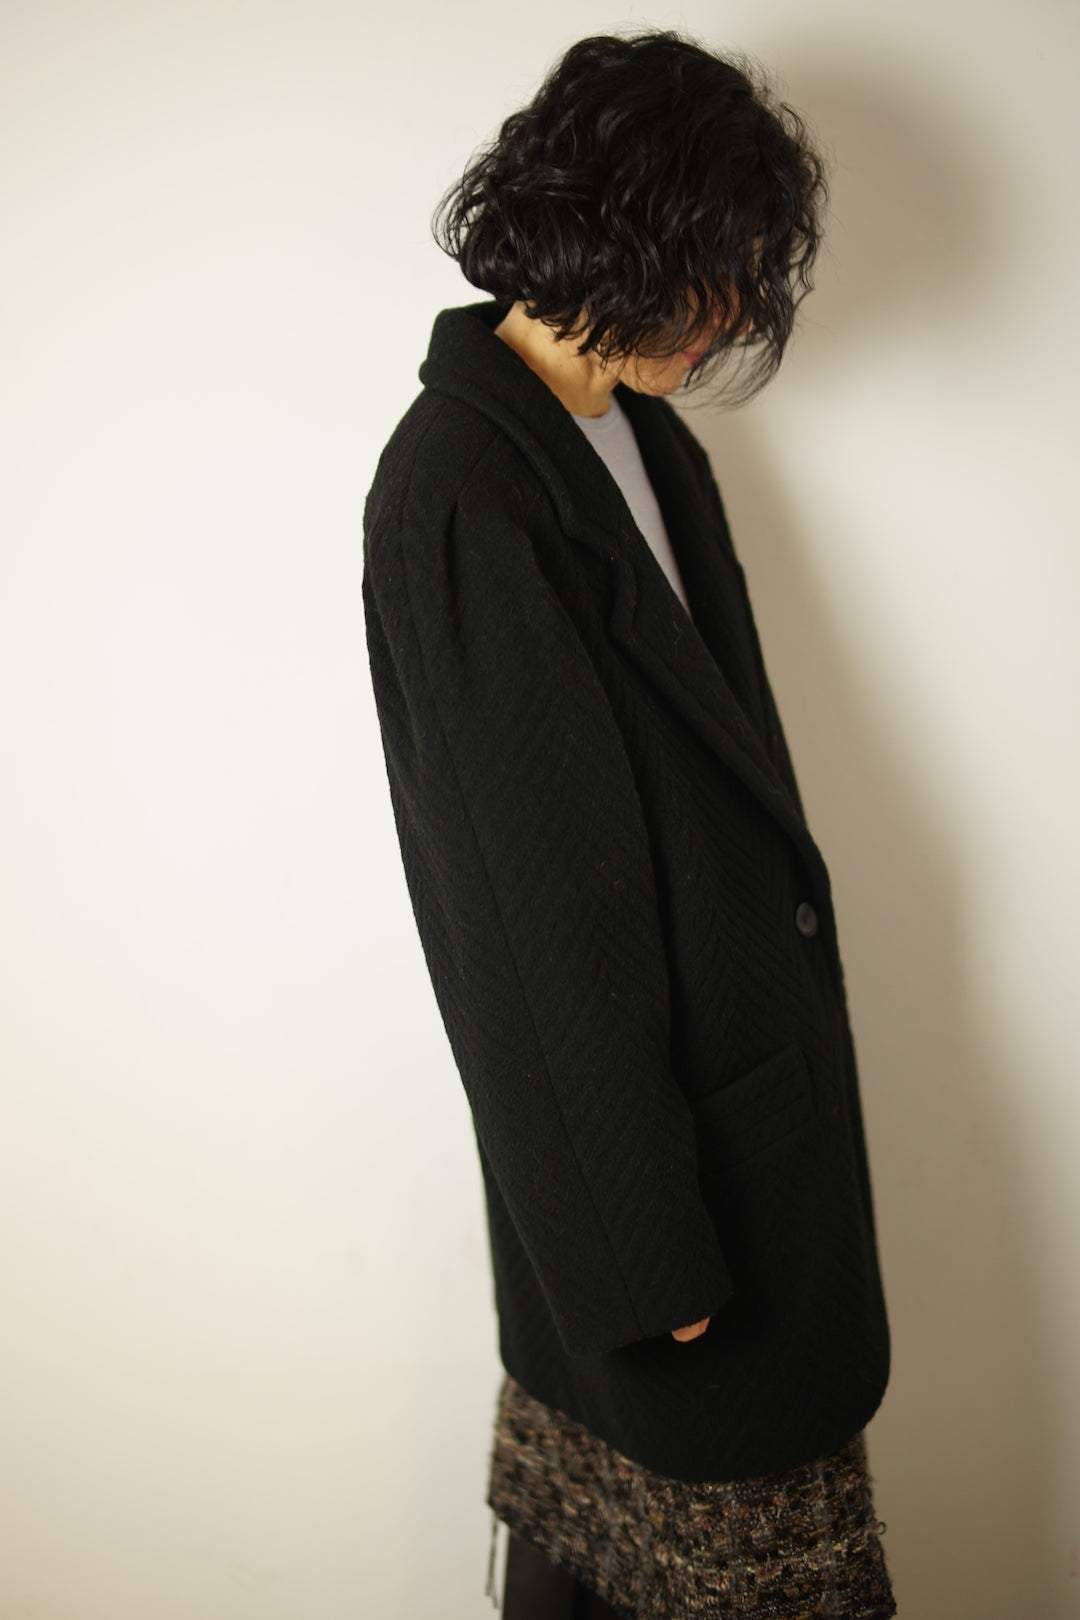 Vintage black coat